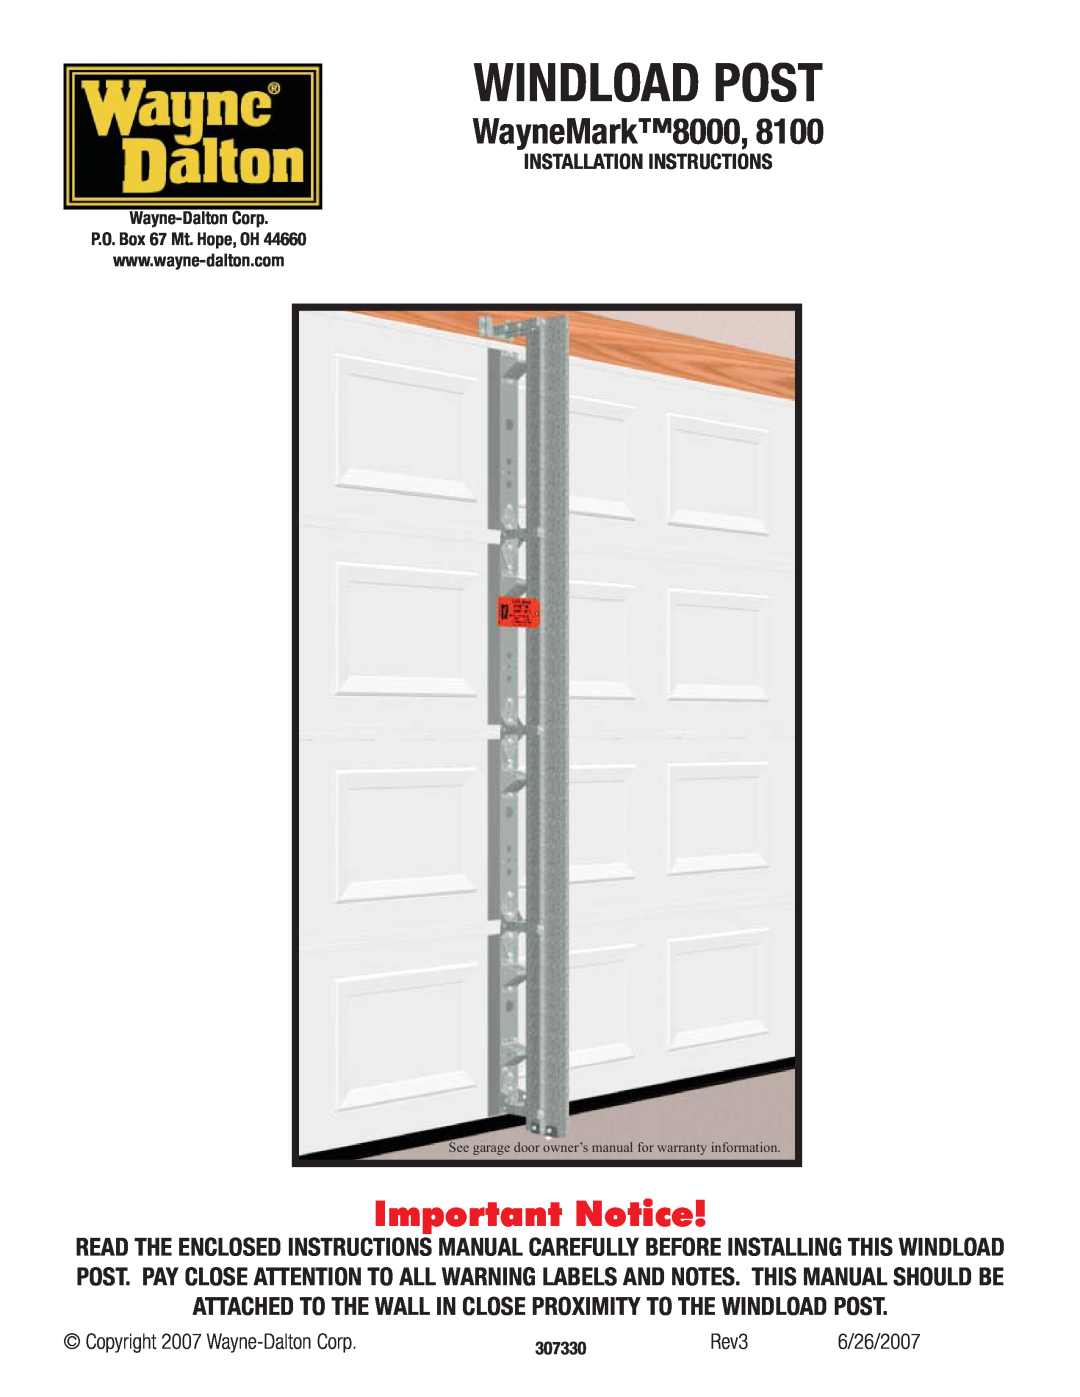 Wayne-Dalton 9000 installation instructions Important Safety Notices, Keyed-in-HandleAutolatch ECR Lock, Important Notice 